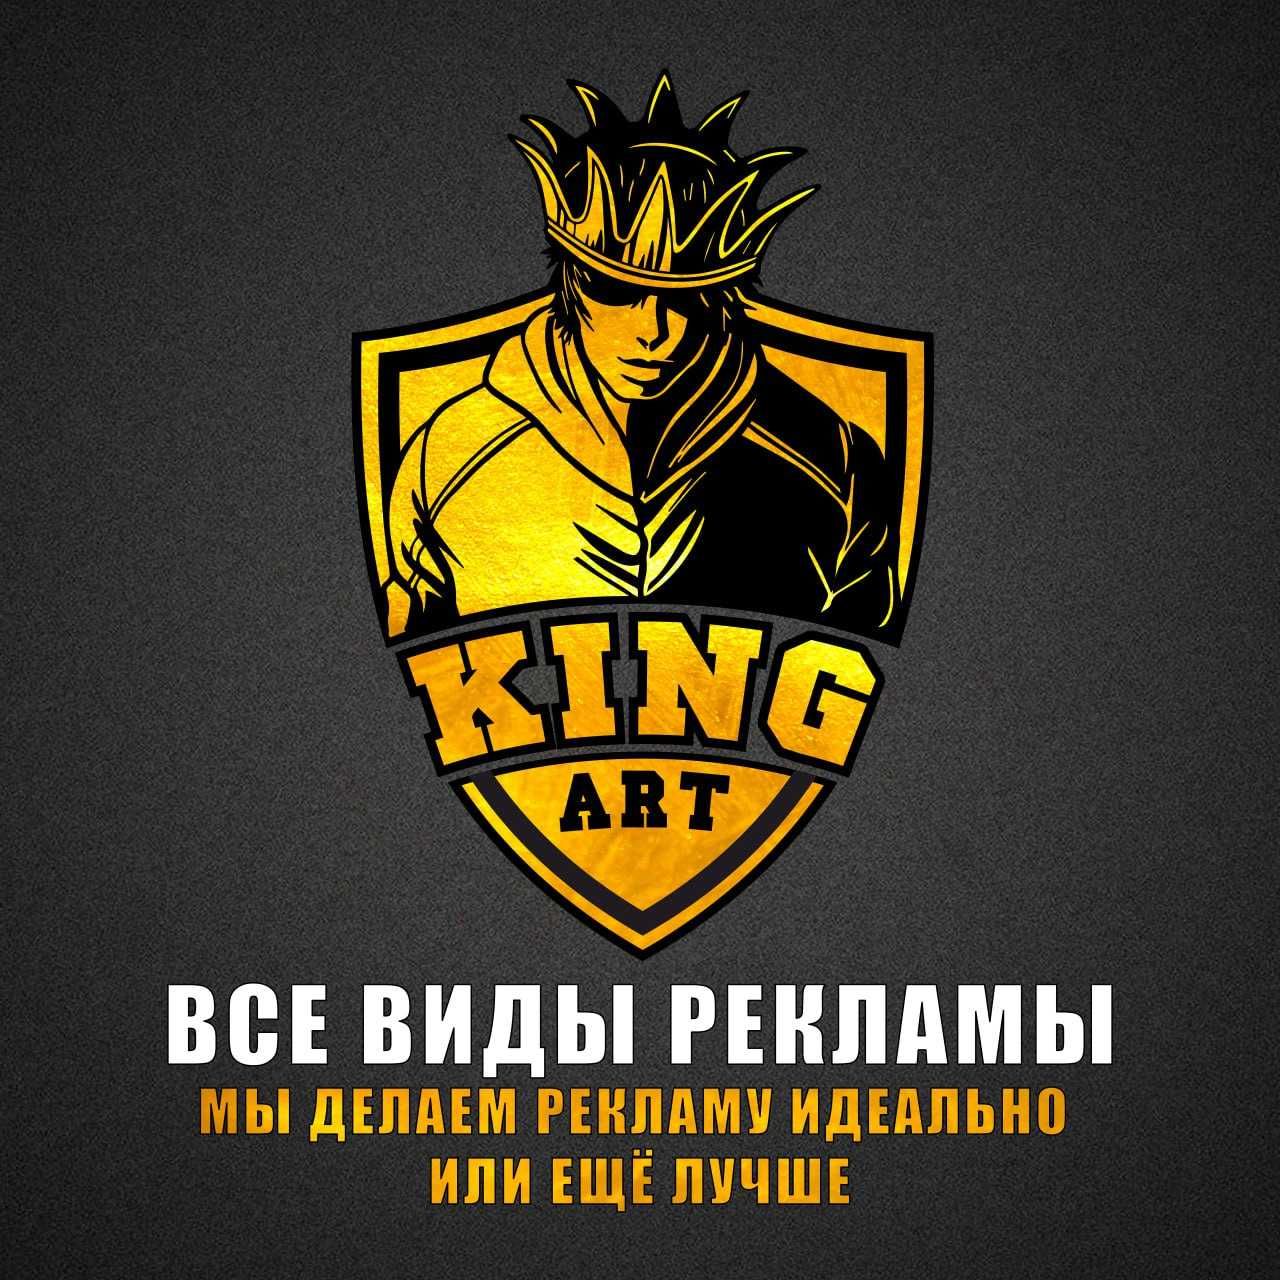 Рекламное агентство "KING ART"